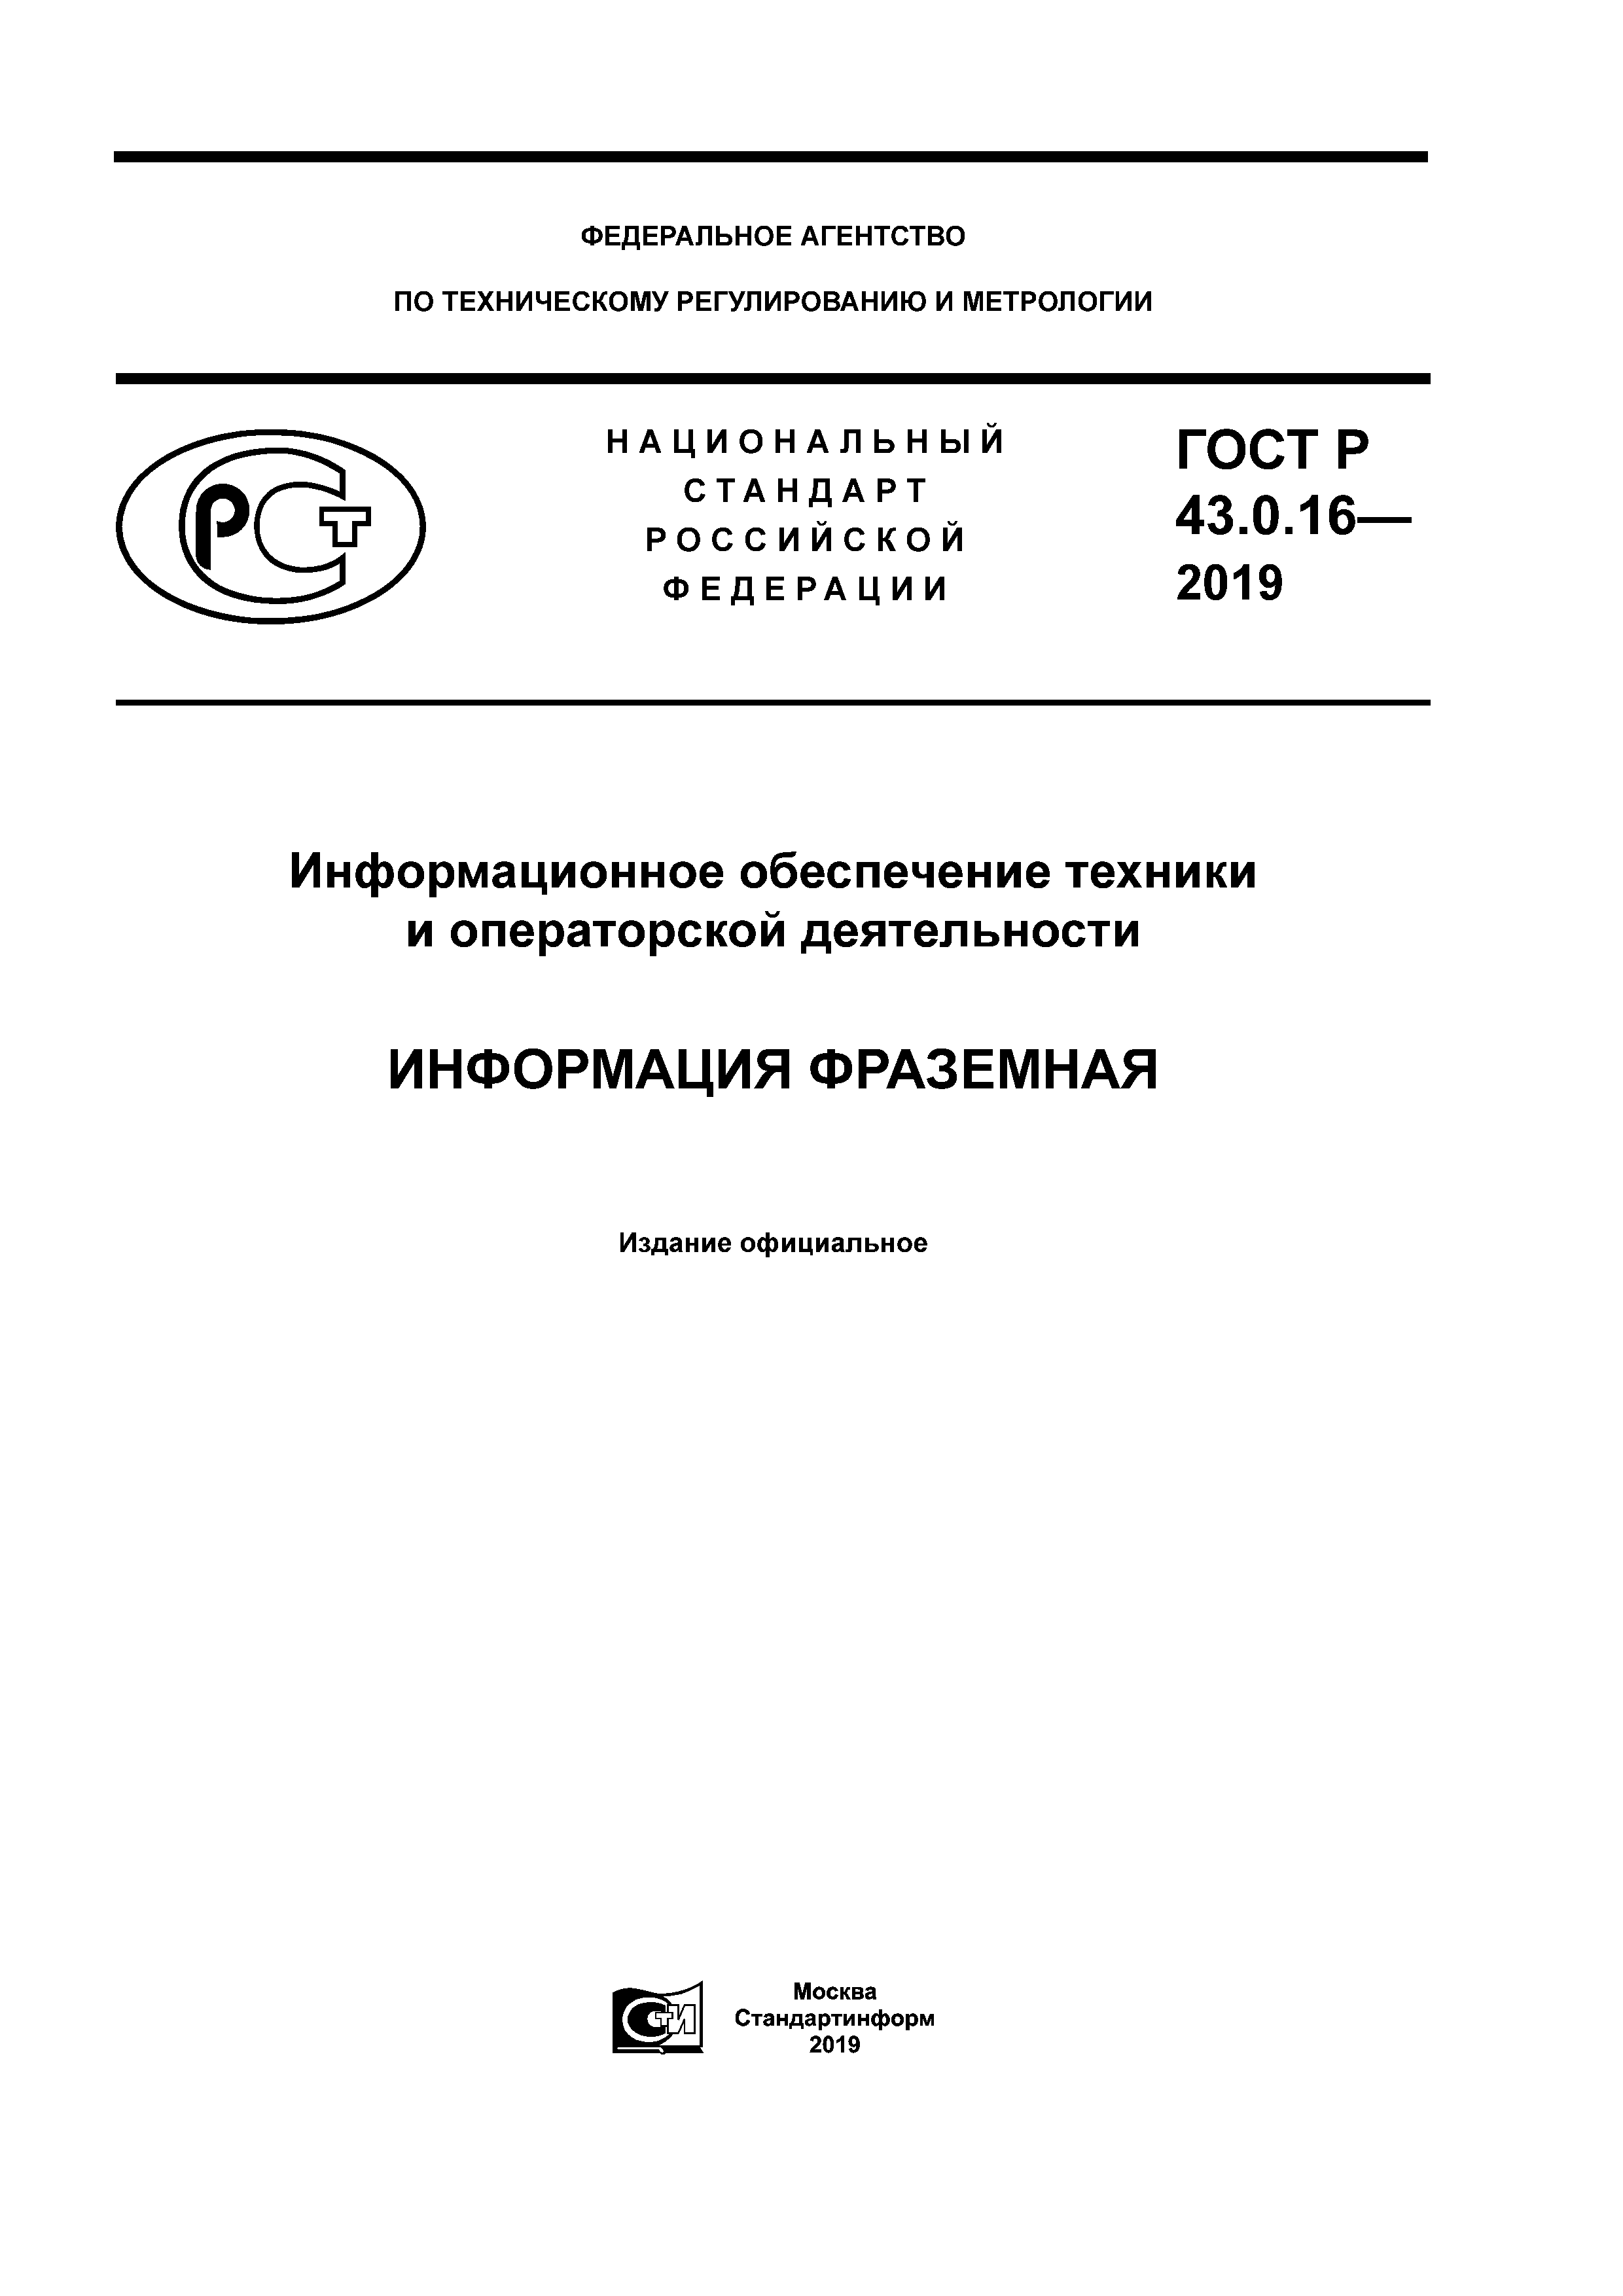 ГОСТ Р 43.0.16-2019